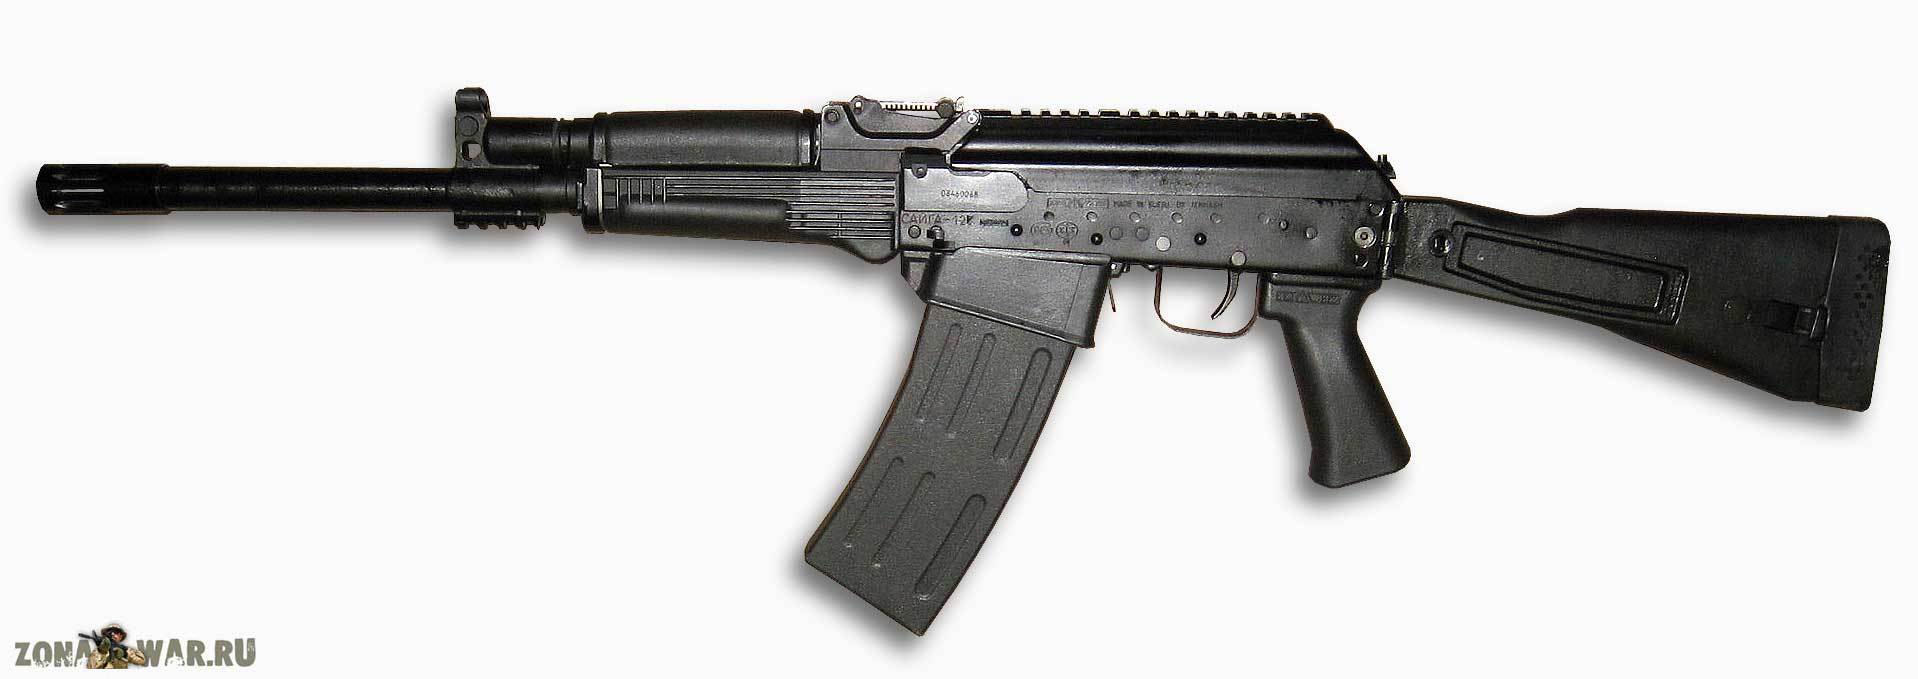 Saiga-12 Ver.030 special smooth-bore carbine